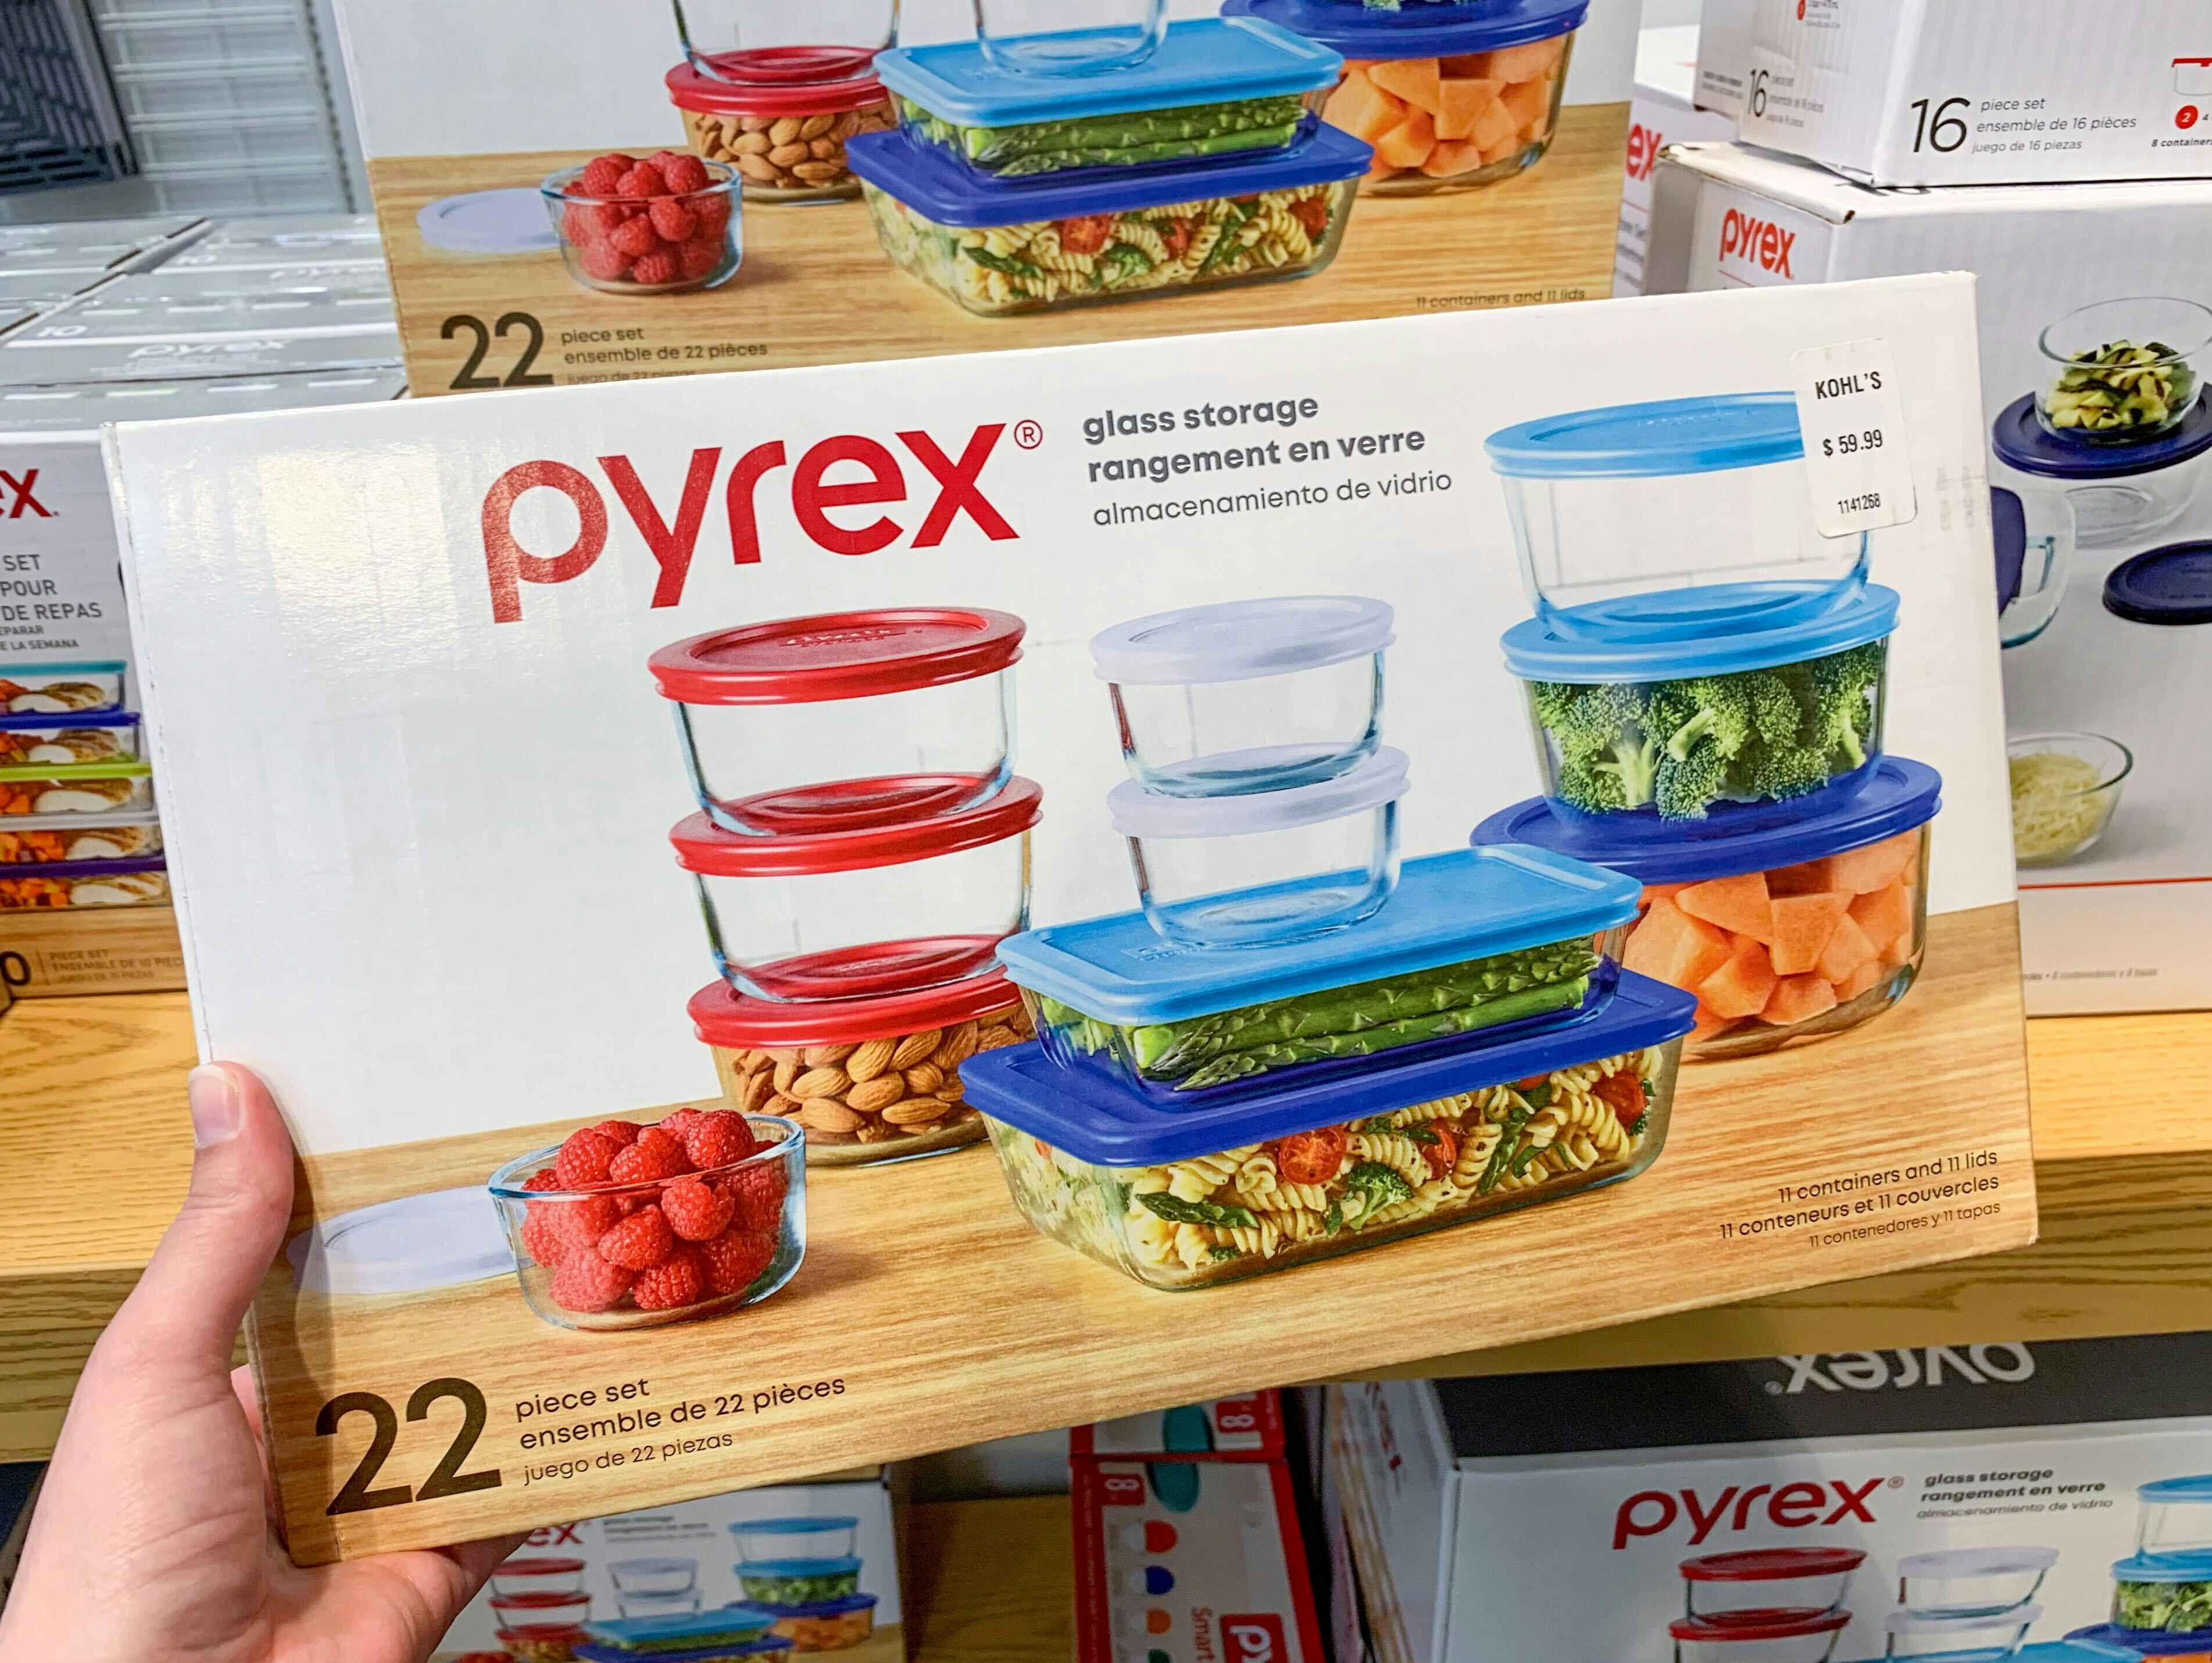 kohls Pyrex 22-Piece Glass Food Storage Set stock image 2021 i